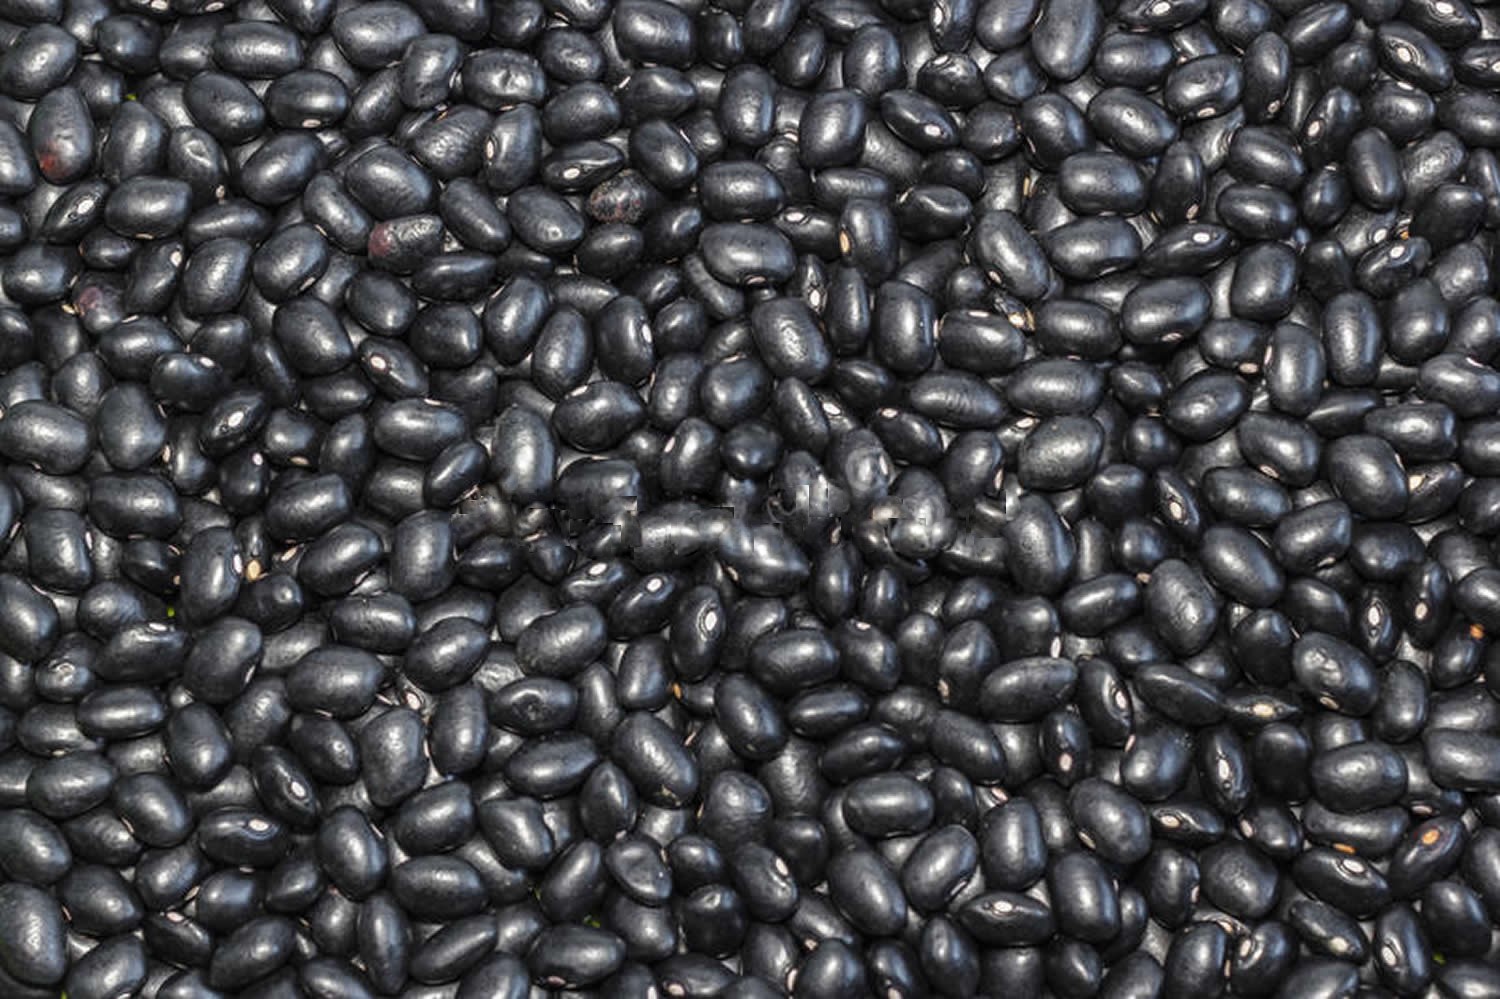 Black adzuki beans